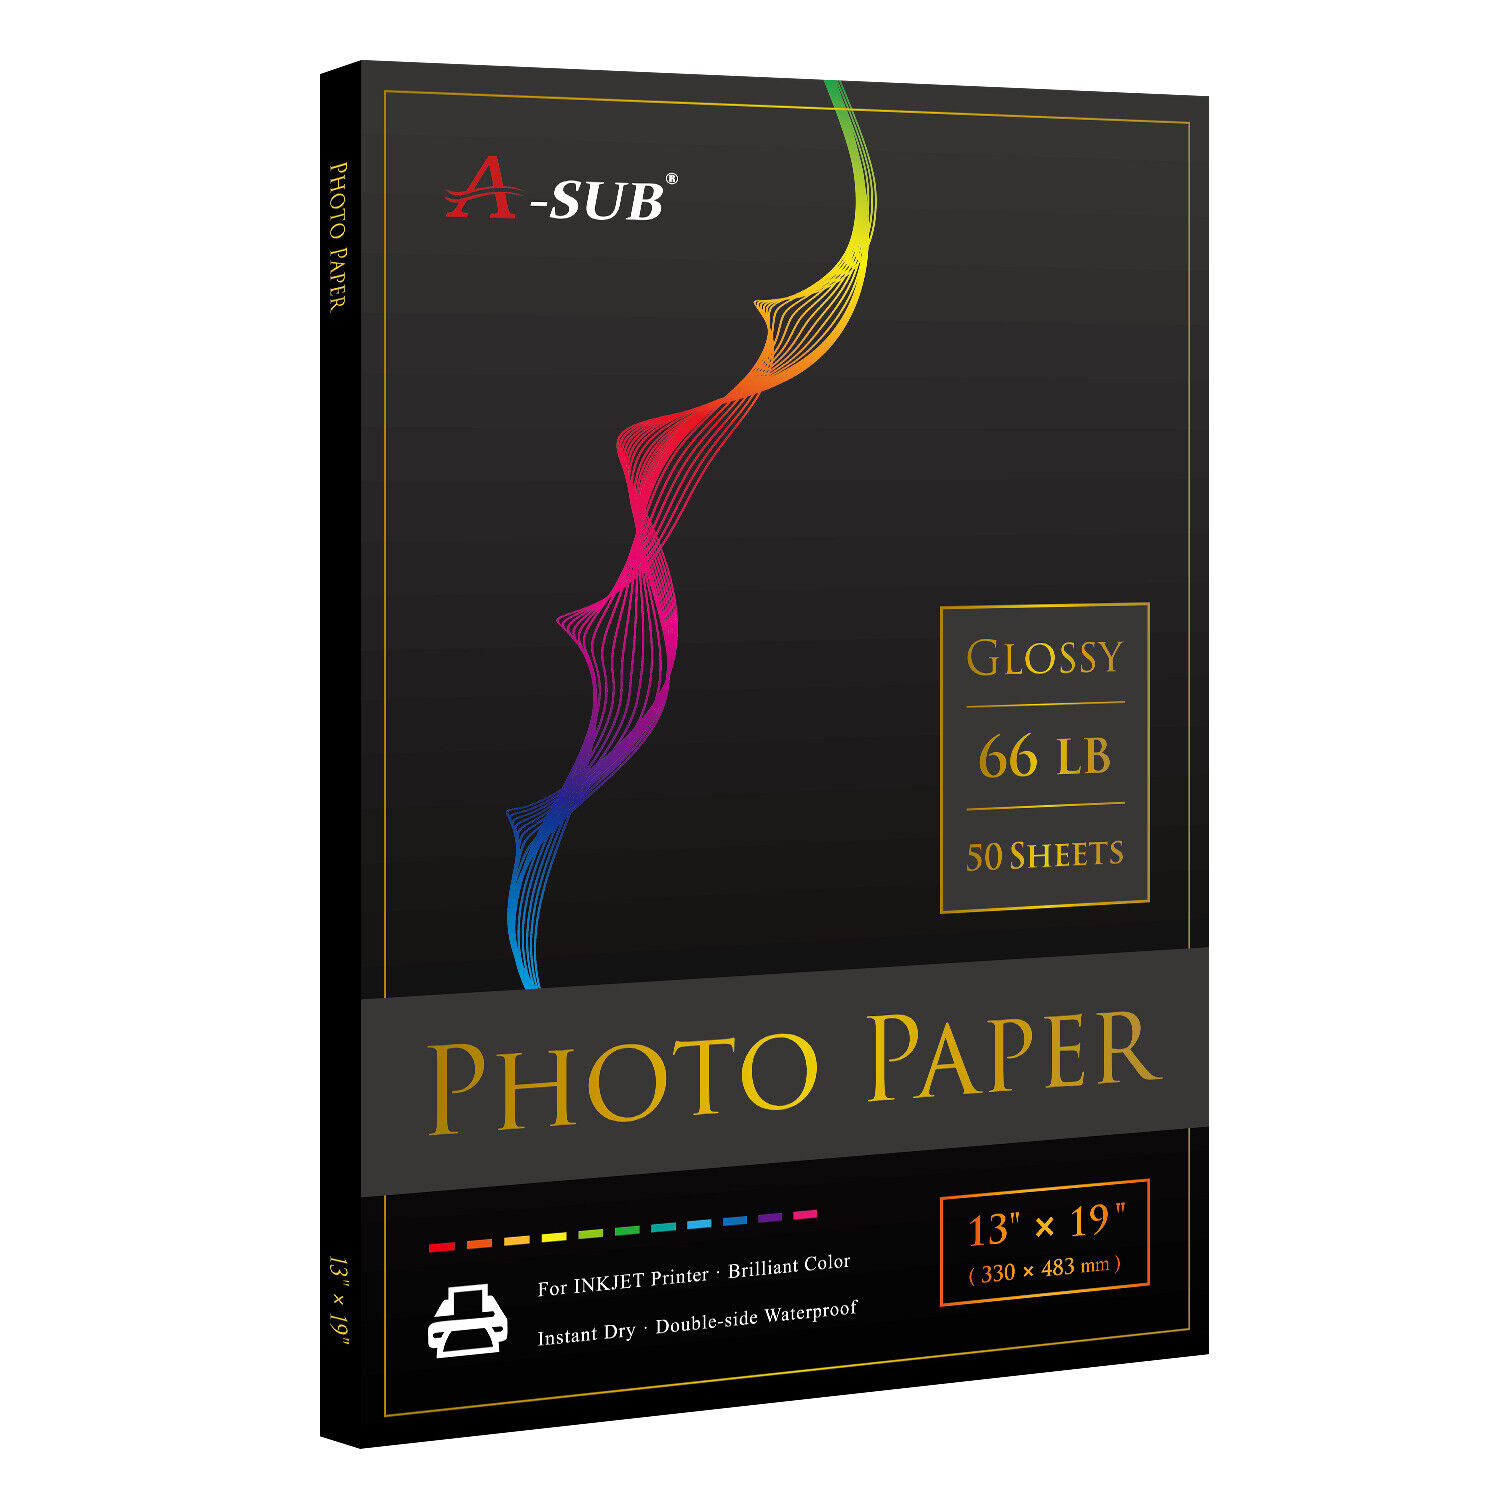 A-SUB Premium Photo Paper 13x19 Glossy 66 lb Waterproof Inkjet Printer A3+ 50 Sh